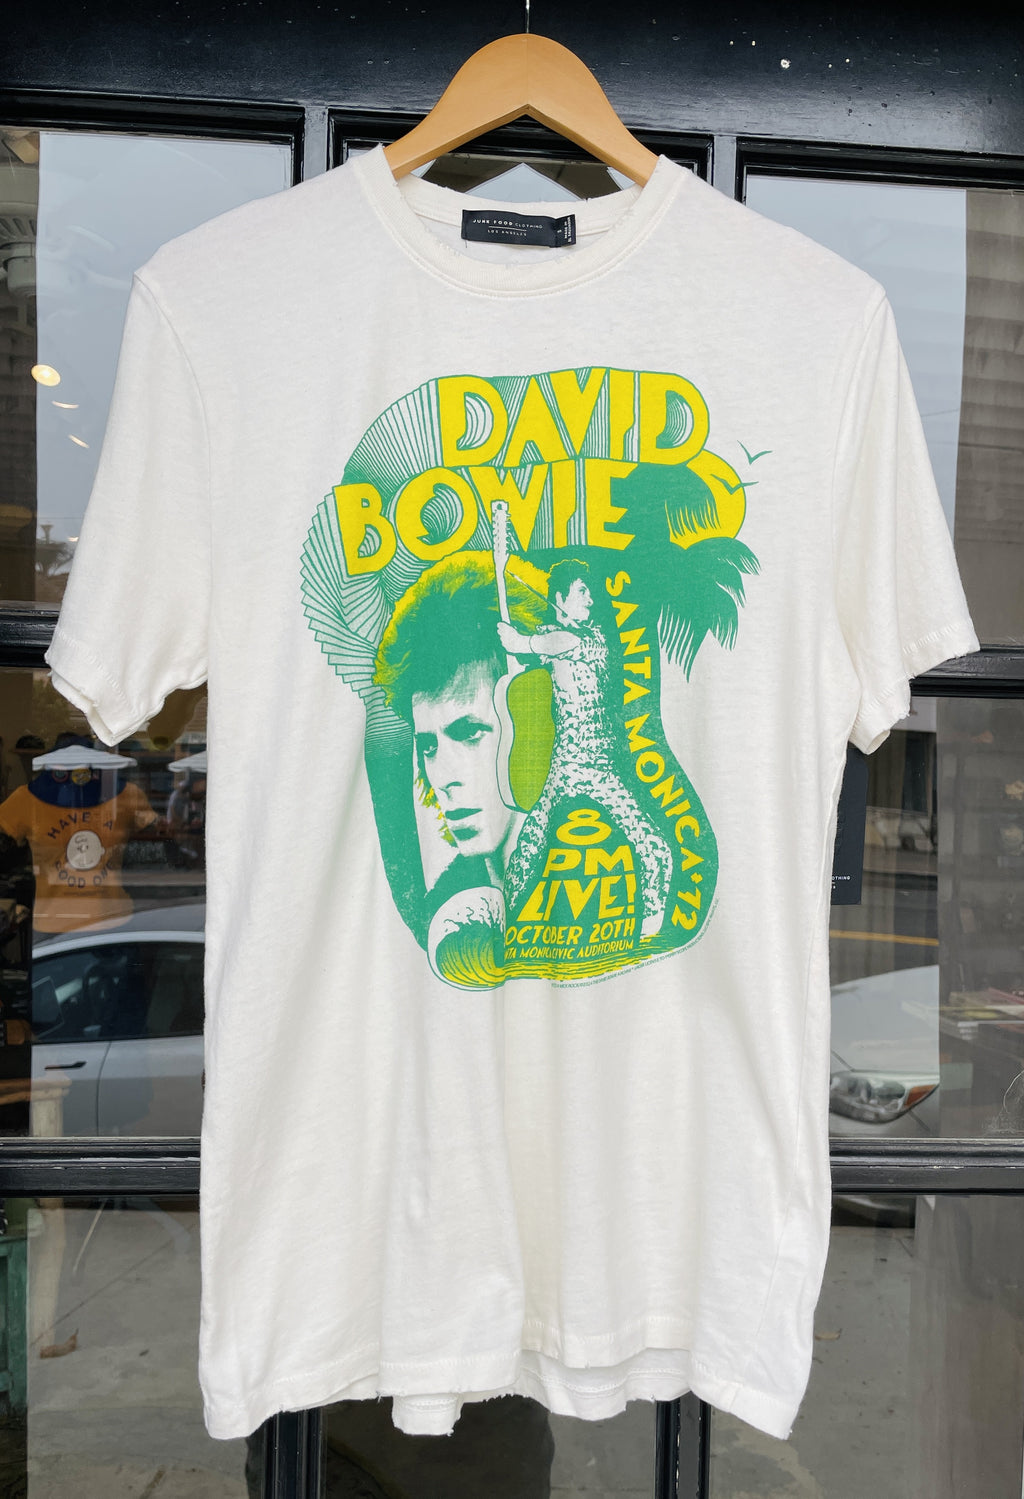 Bowie Santa Monica